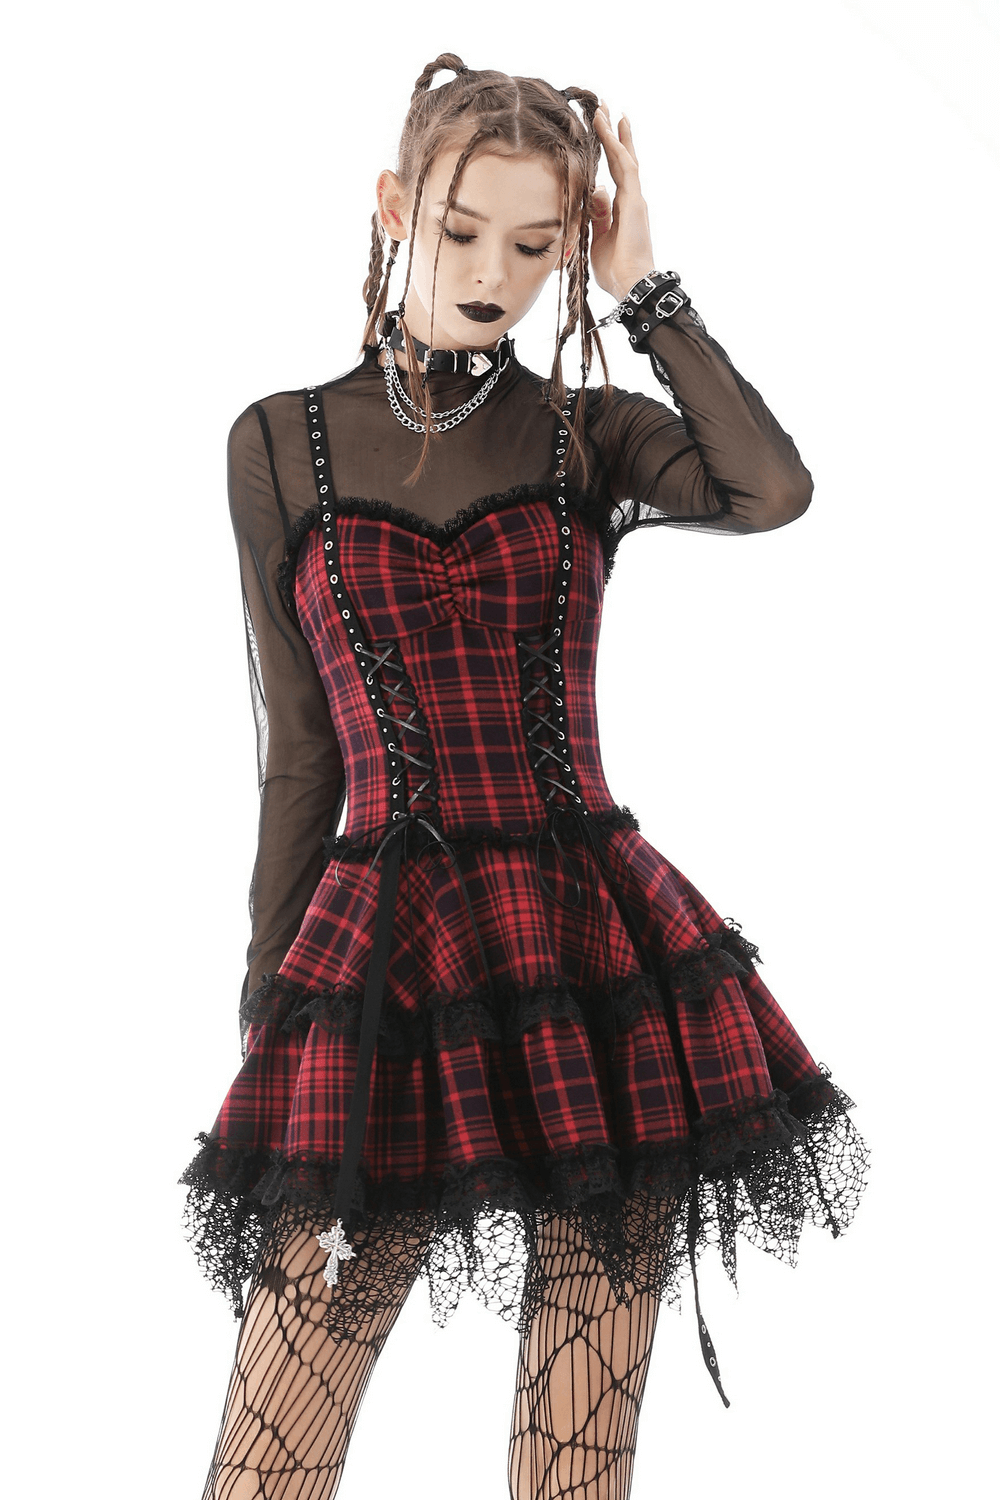 Dark Punk Studded Mini Dress with Black Lace - Goth Emo Grunge